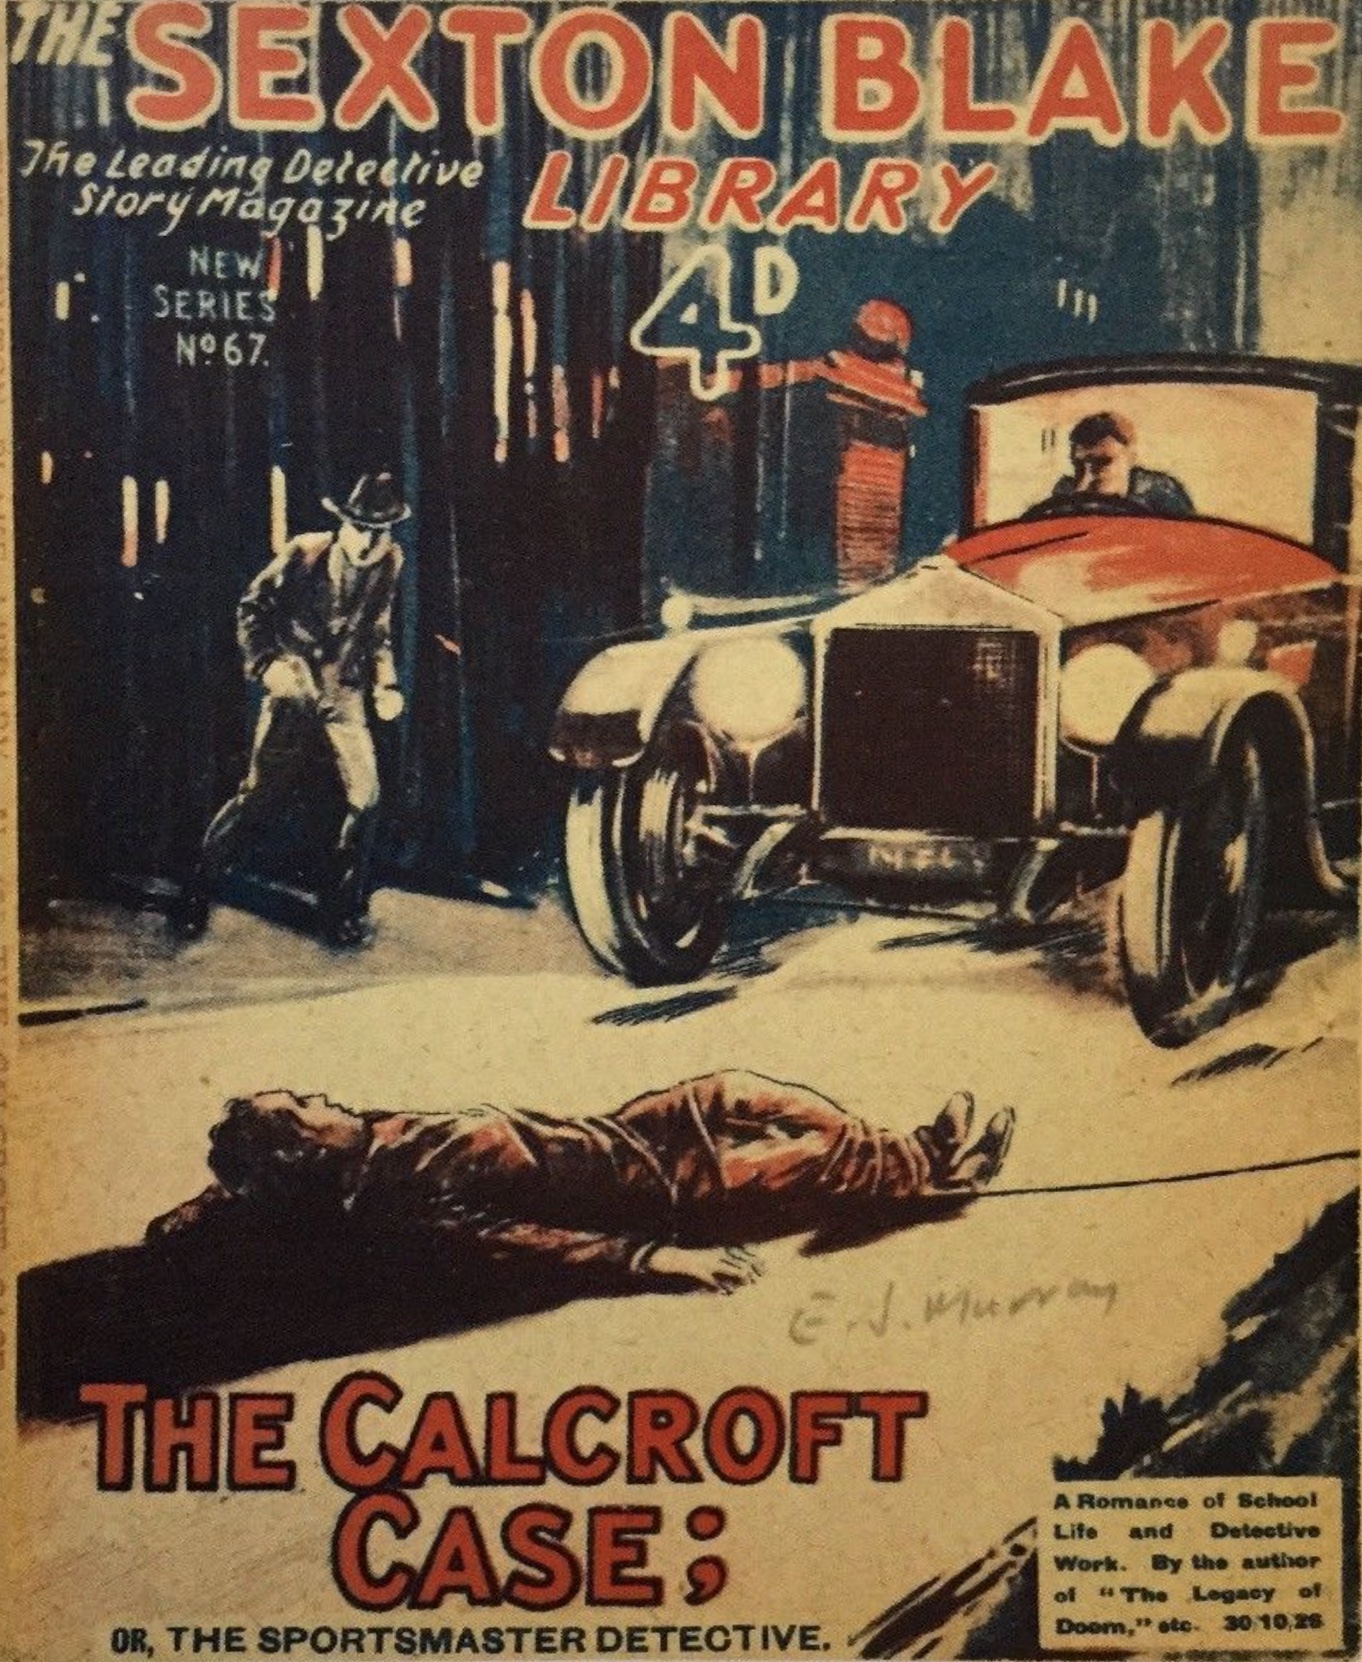 THE CALCROFT CASE